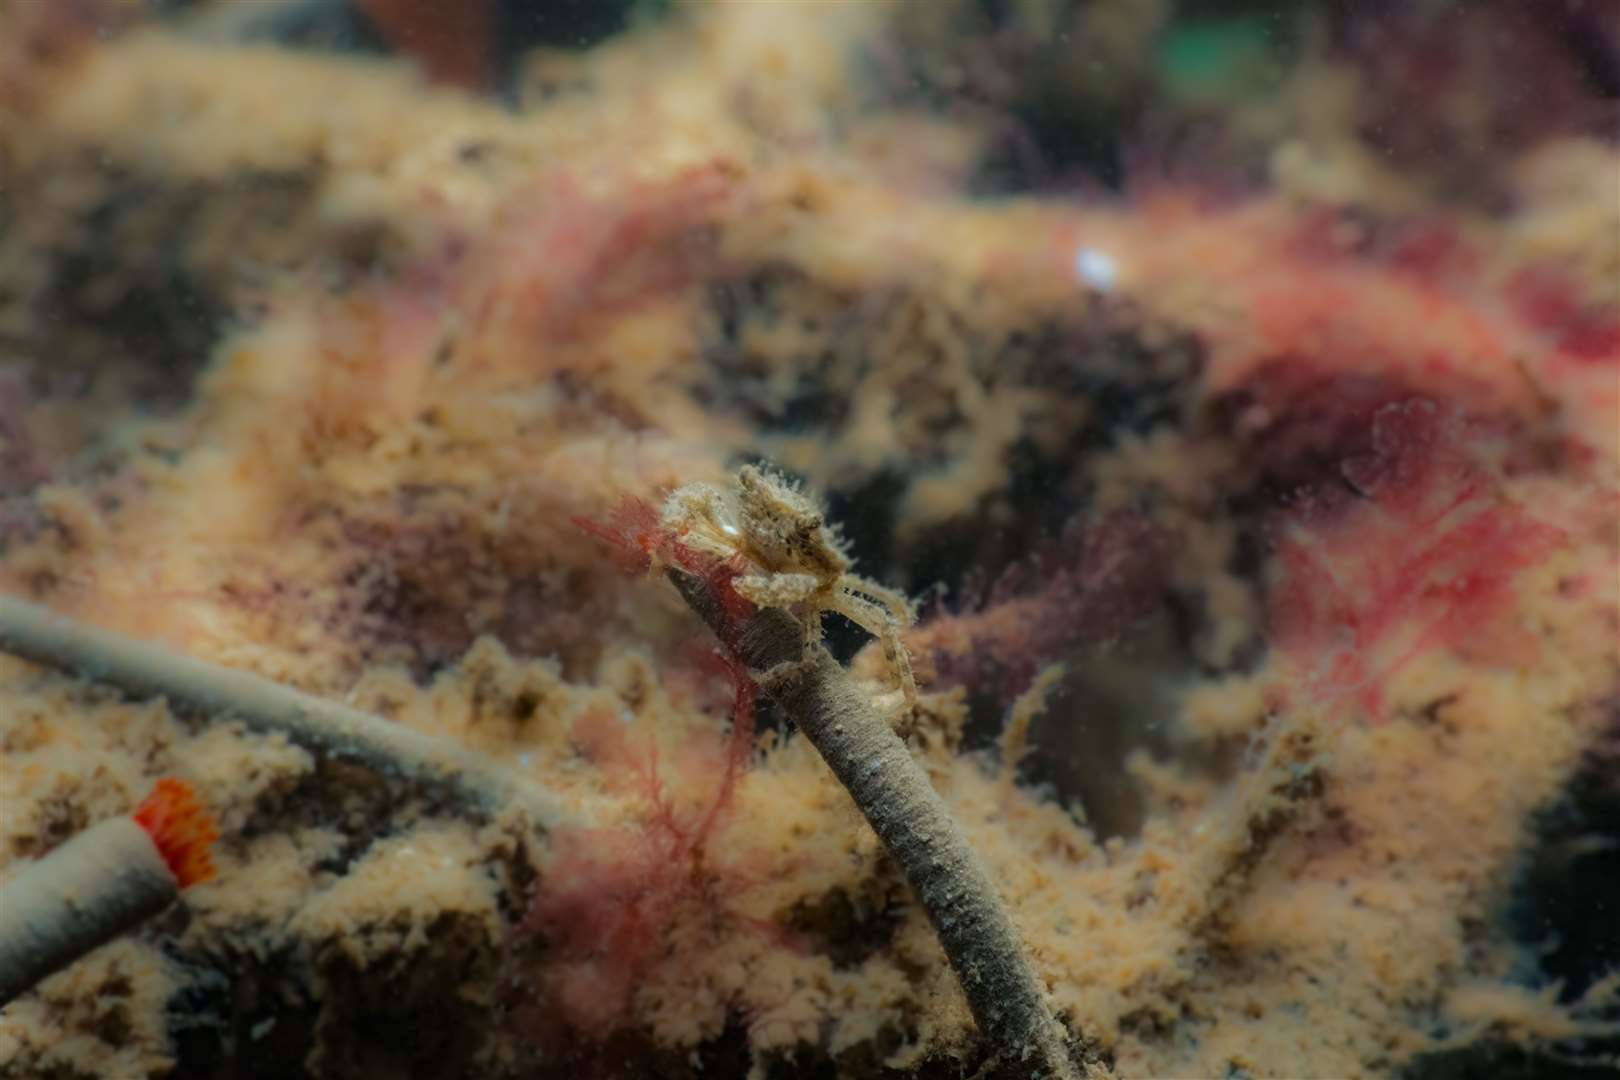 A juvenile shore crab on a fan worm near an oyster nursery (ZSL/PA)